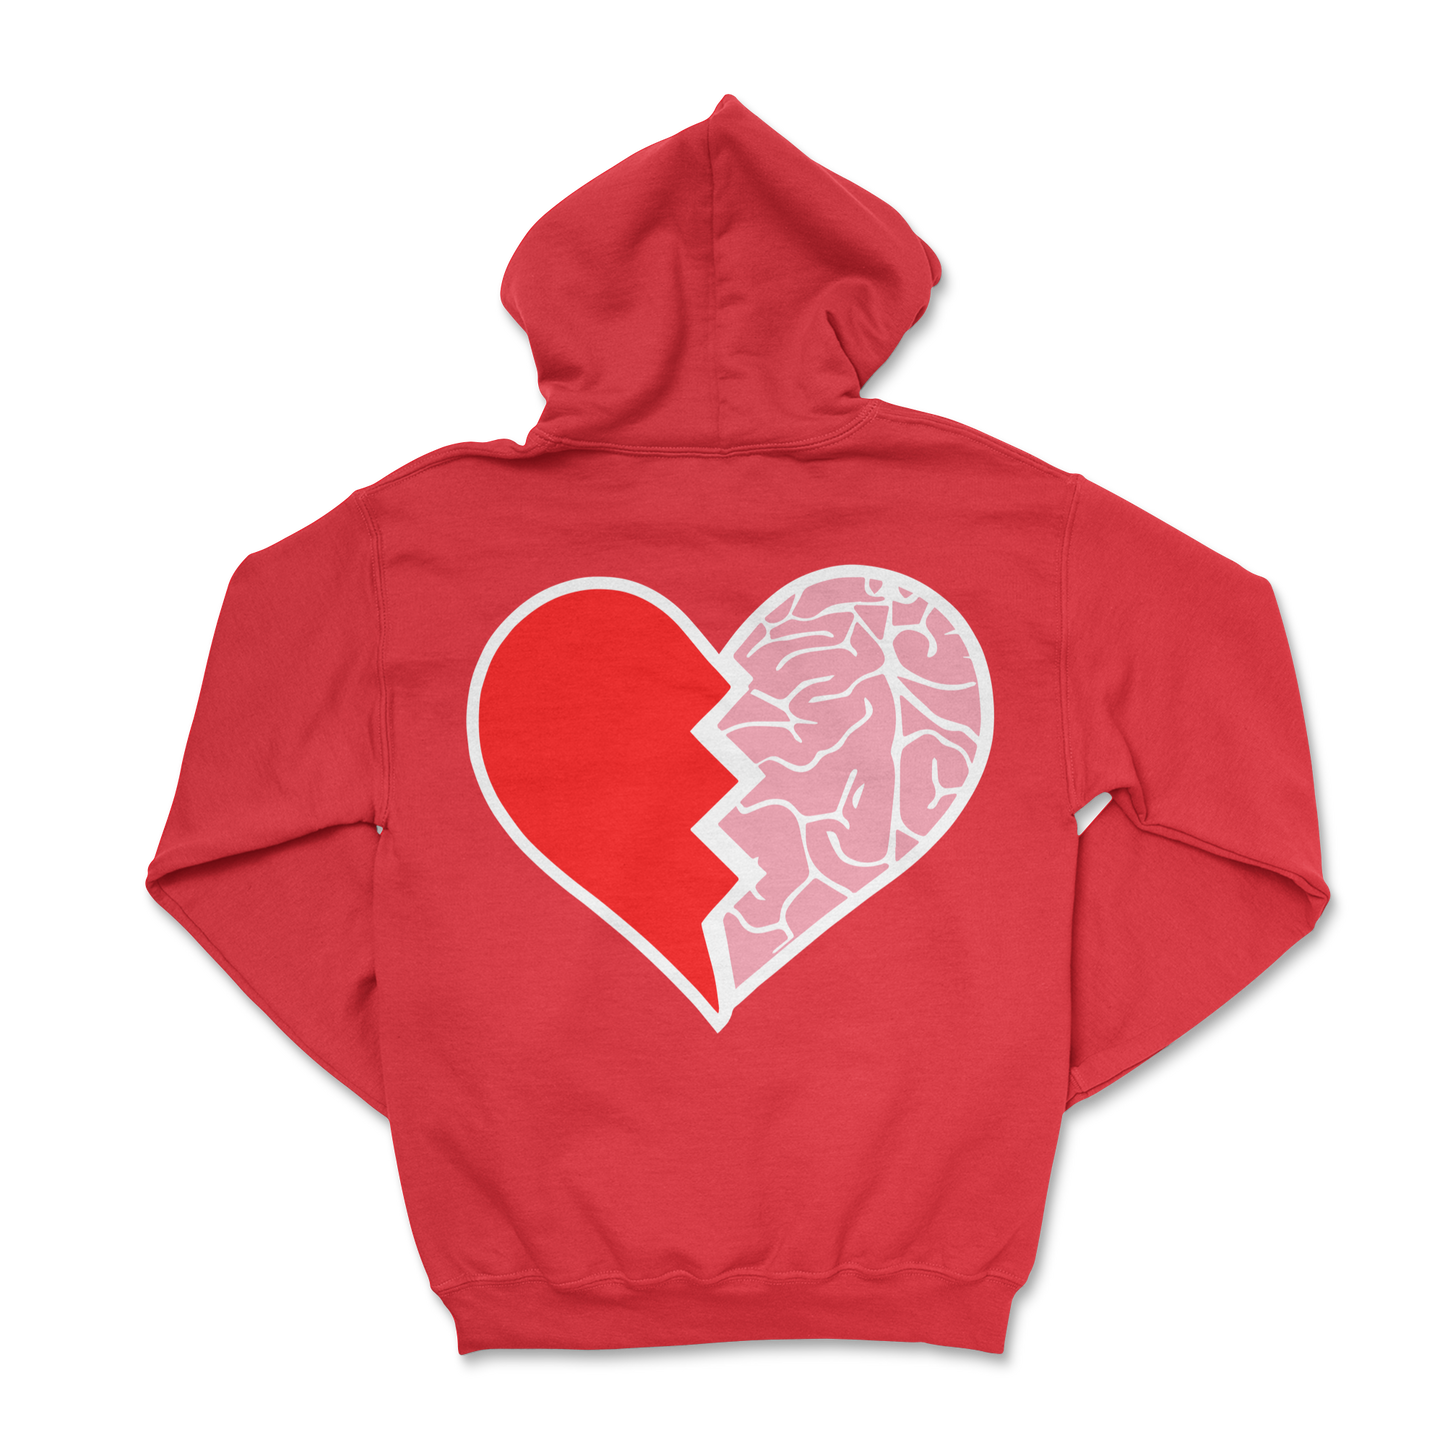 Red Valentine “Unblncd” hoodie